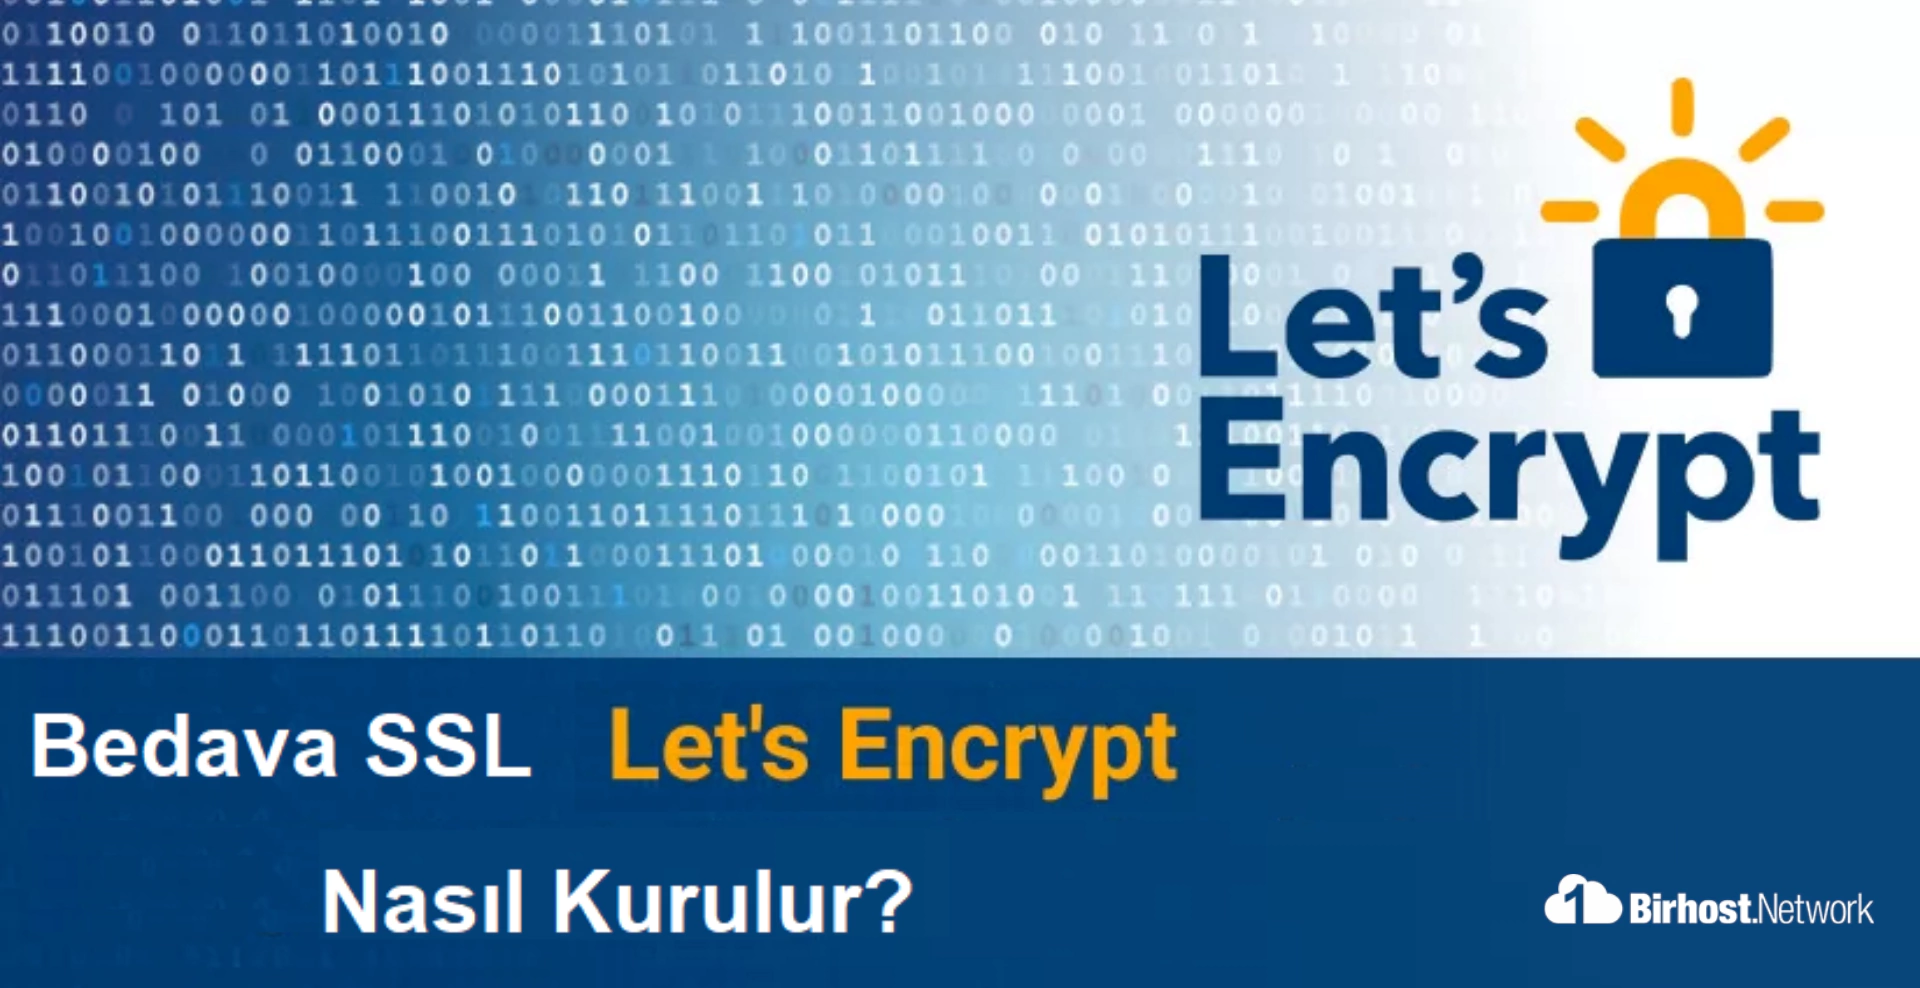 Bedava SSL lets encrypt nasıl kurulur